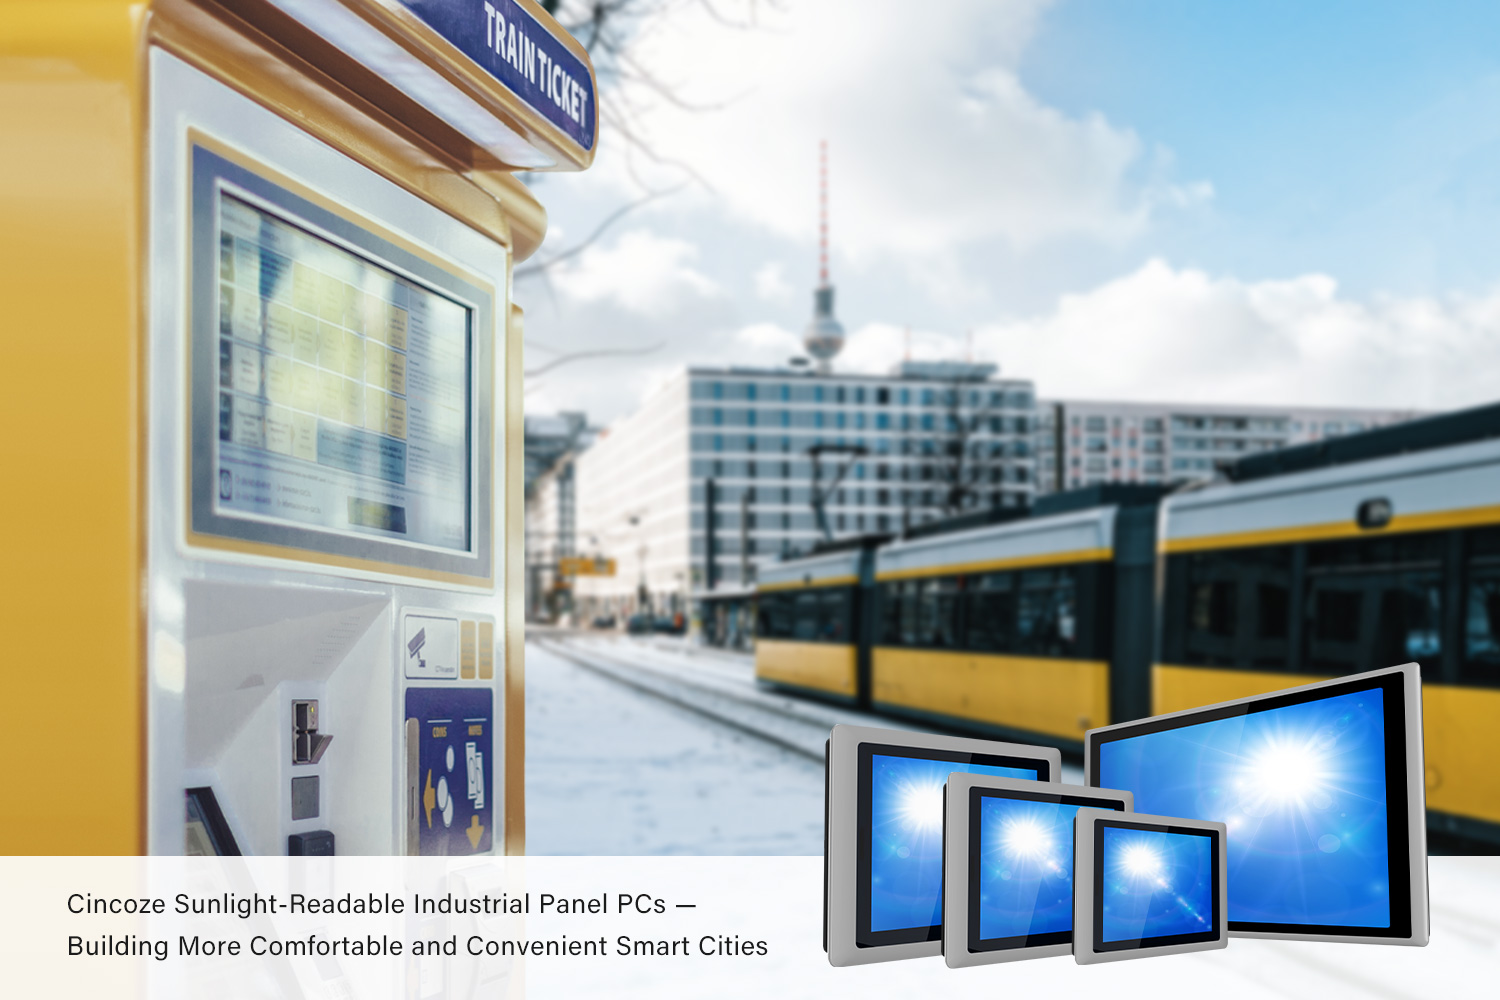 Cincoze Sunlight-Readable Industrial Panel PCs—Building More Comfortable and Convenient Smart Cities